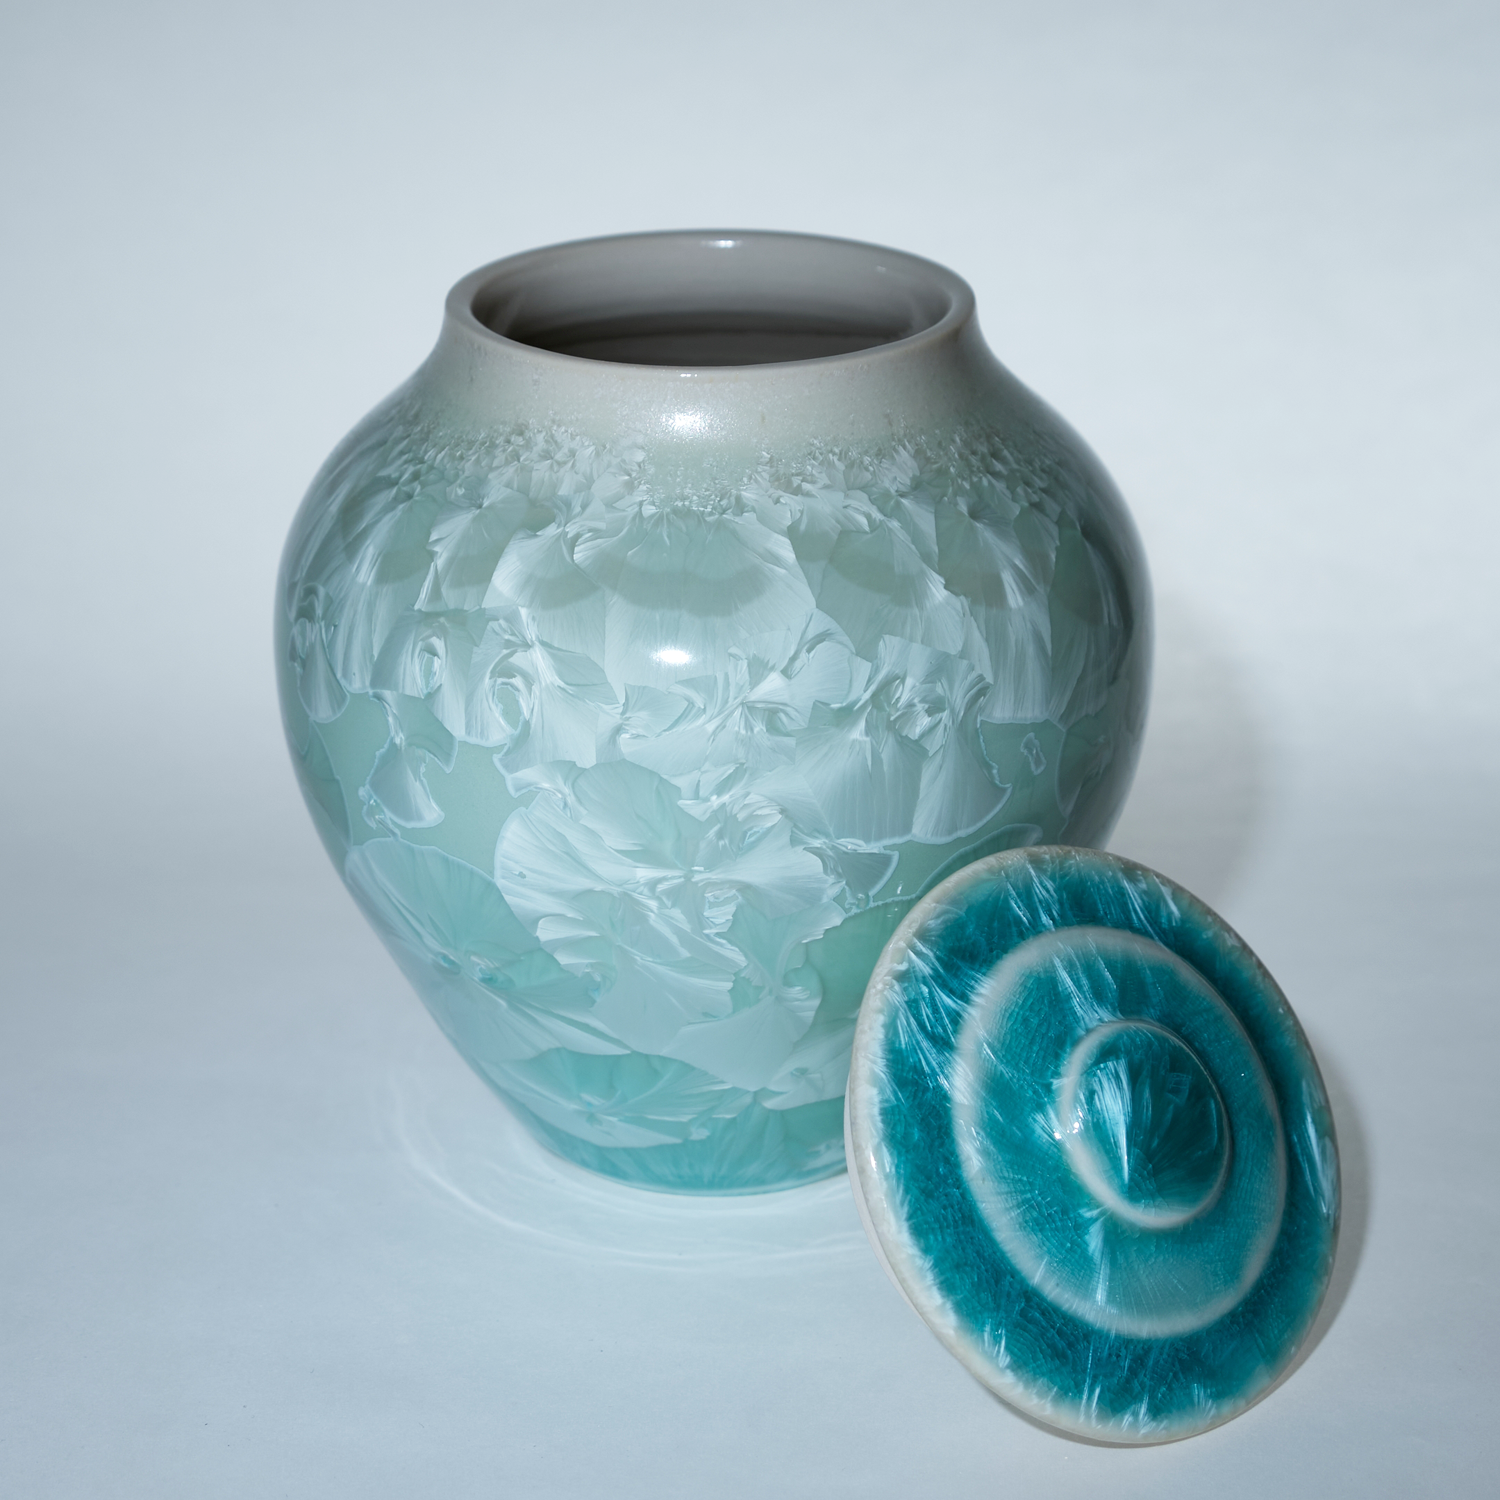 Yumiko Katsuya: Turquoise Lidded Container Product Image 1 of 1